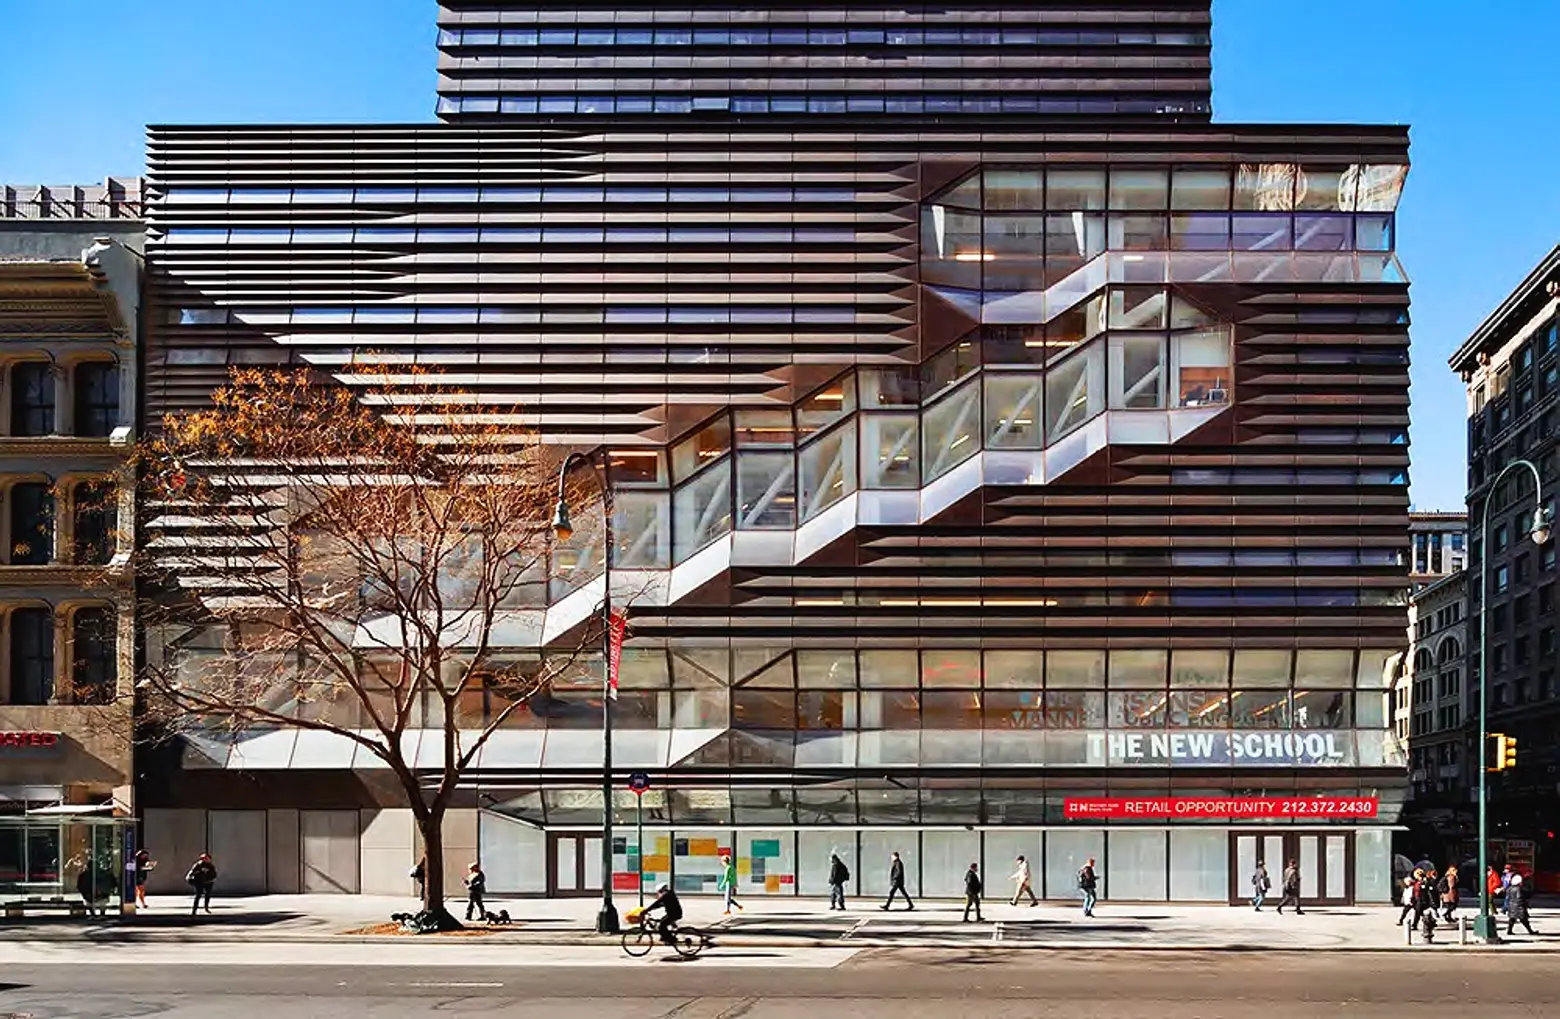 Dorm architecture: Admiring avant-garde student housing designs in New York